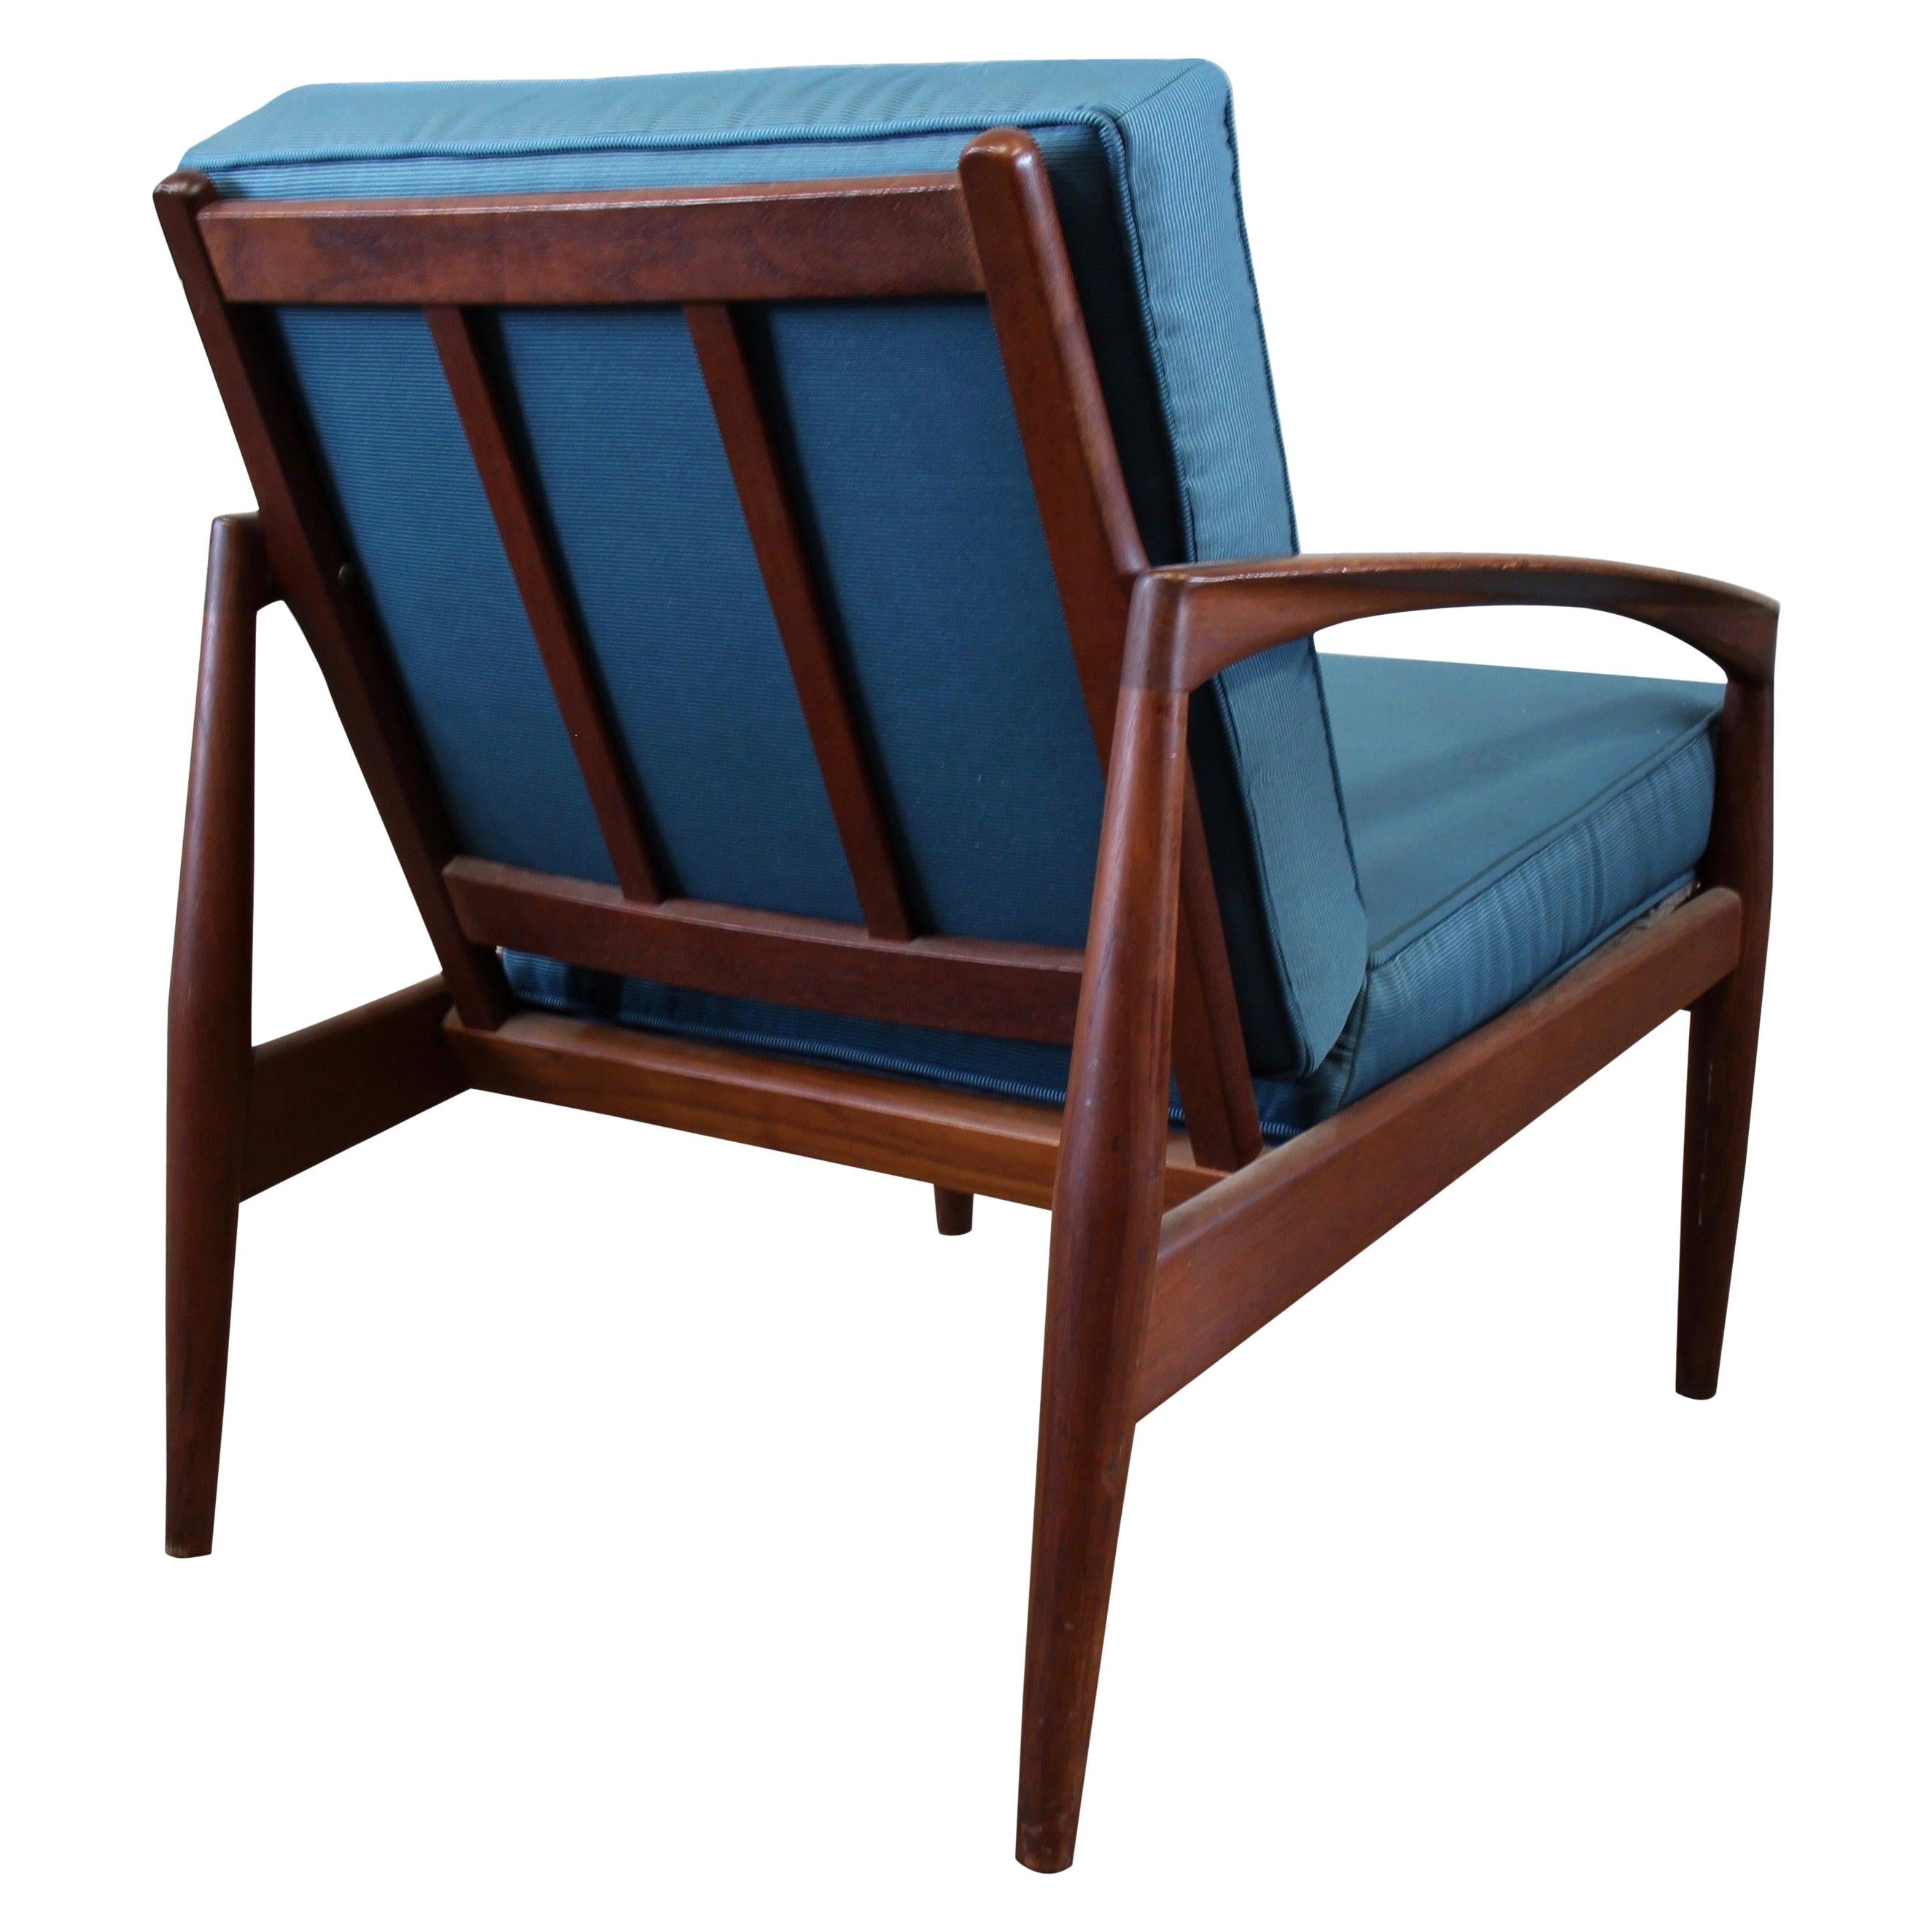 Danish Kai Kristiansen Paper-Knife Chair, Easy Chair Teak, with New Blue Fabric